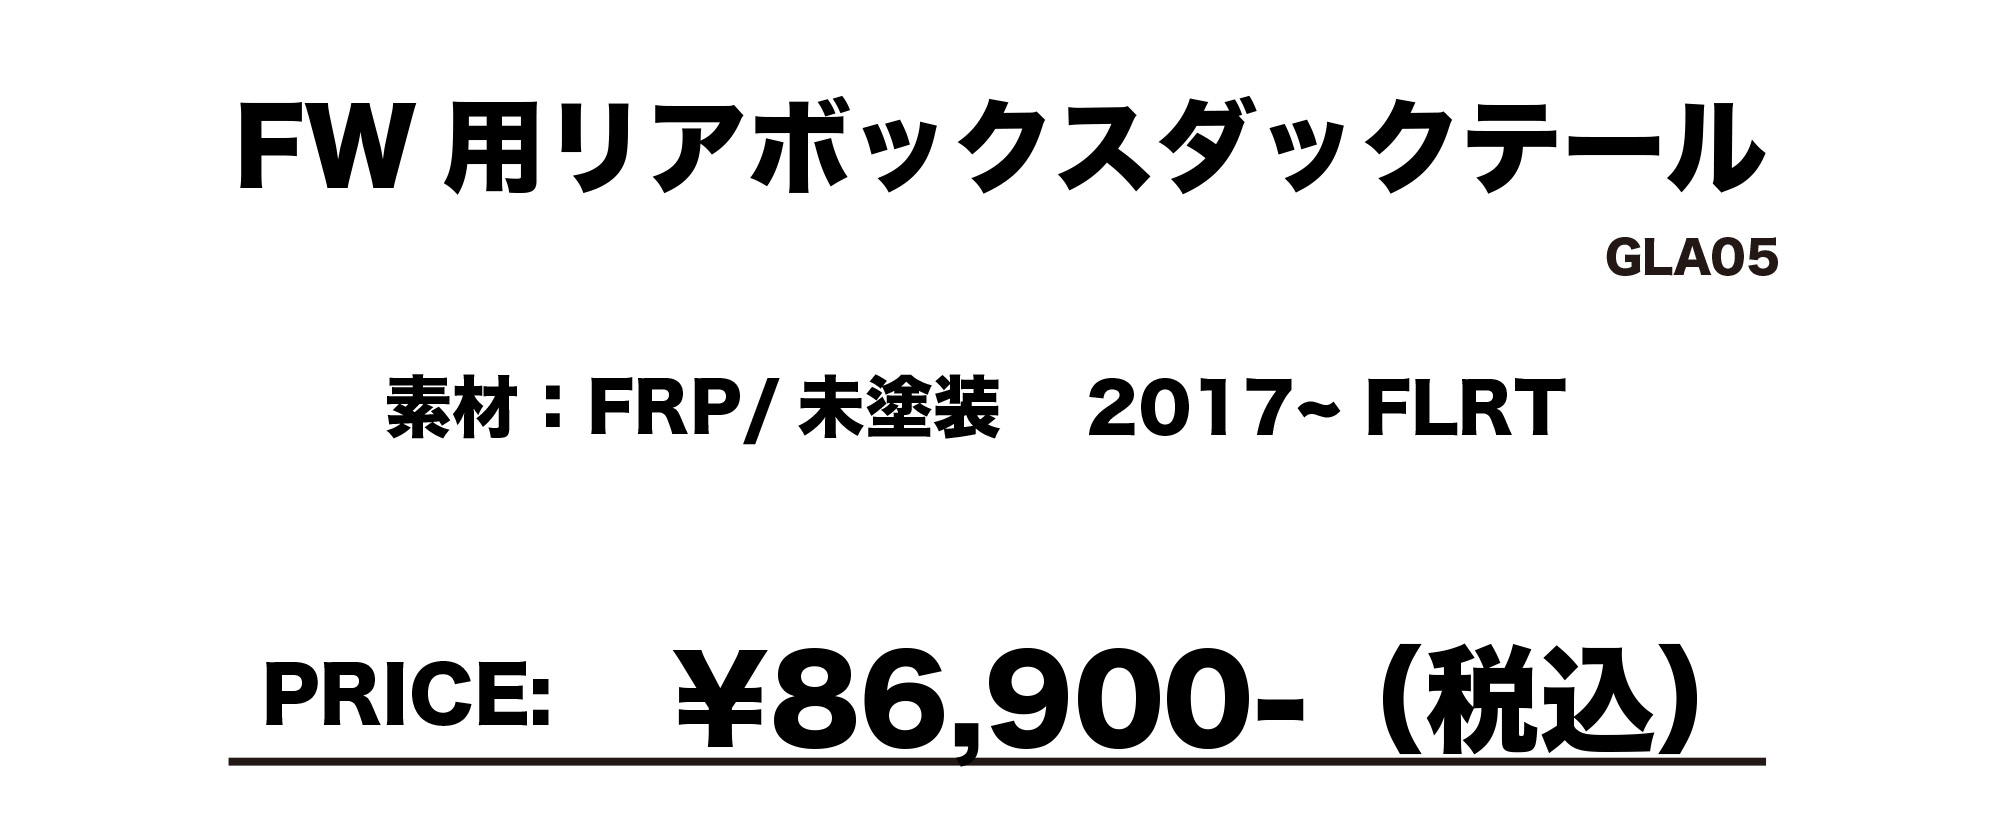 FFW 用リアボックスダックテール GLA05
素材：FRP / 未塗装　2017～FLRT
PRICE: ￥86,900